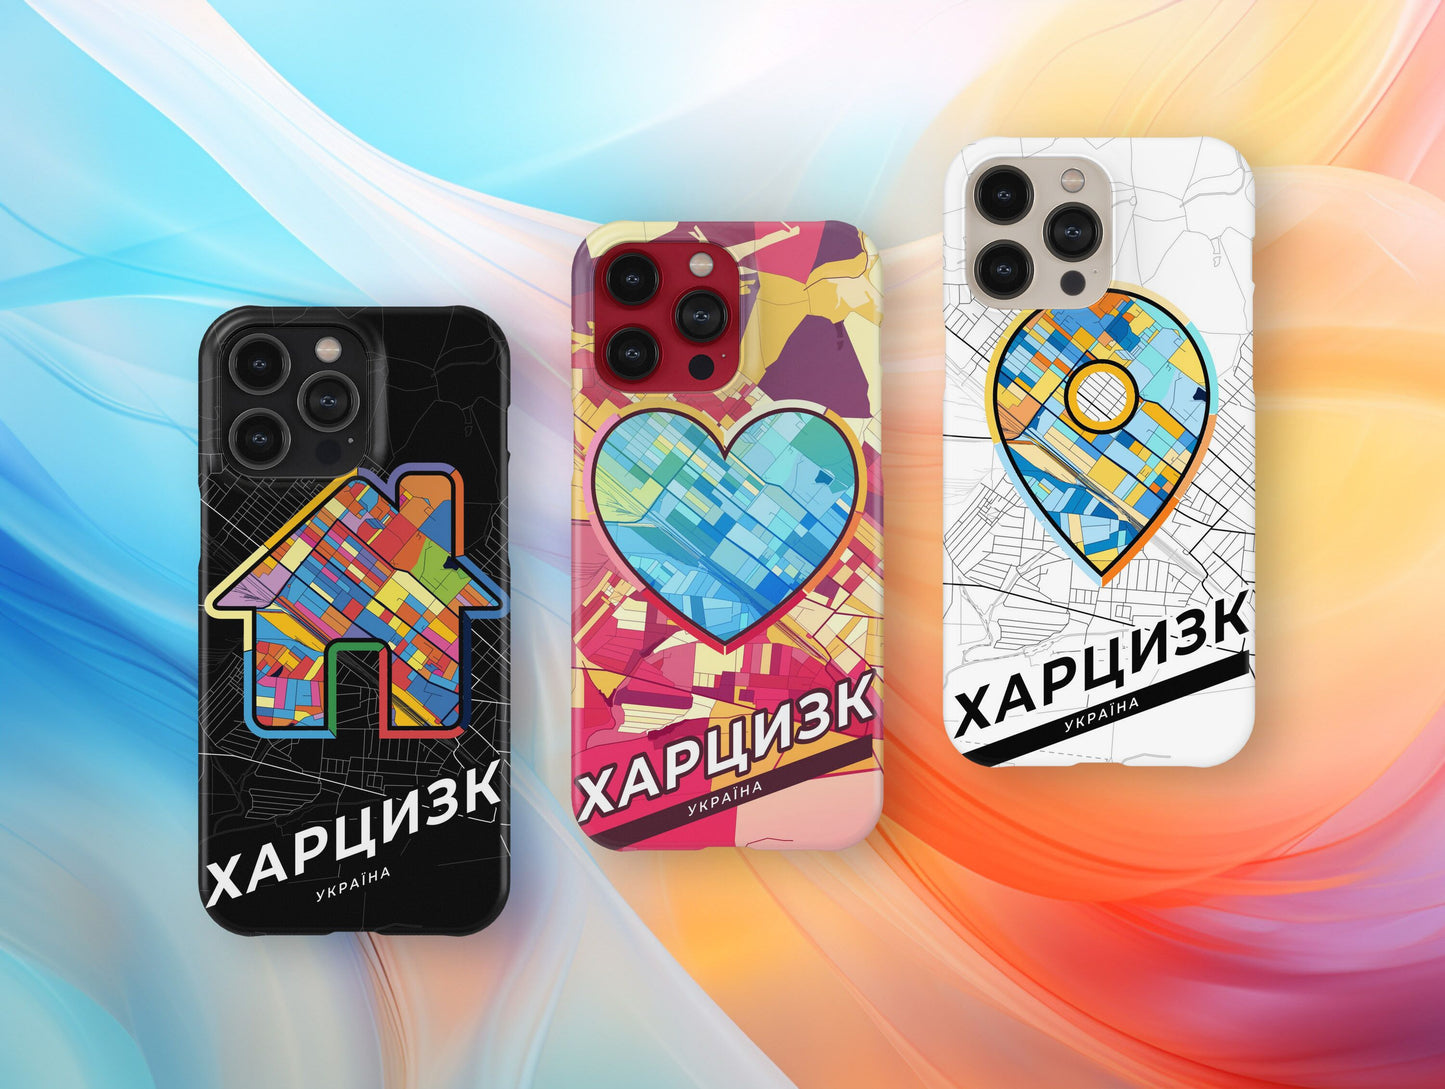 Khartsyzk Ukraine slim phone case with colorful icon. Birthday, wedding or housewarming gift. Couple match cases.